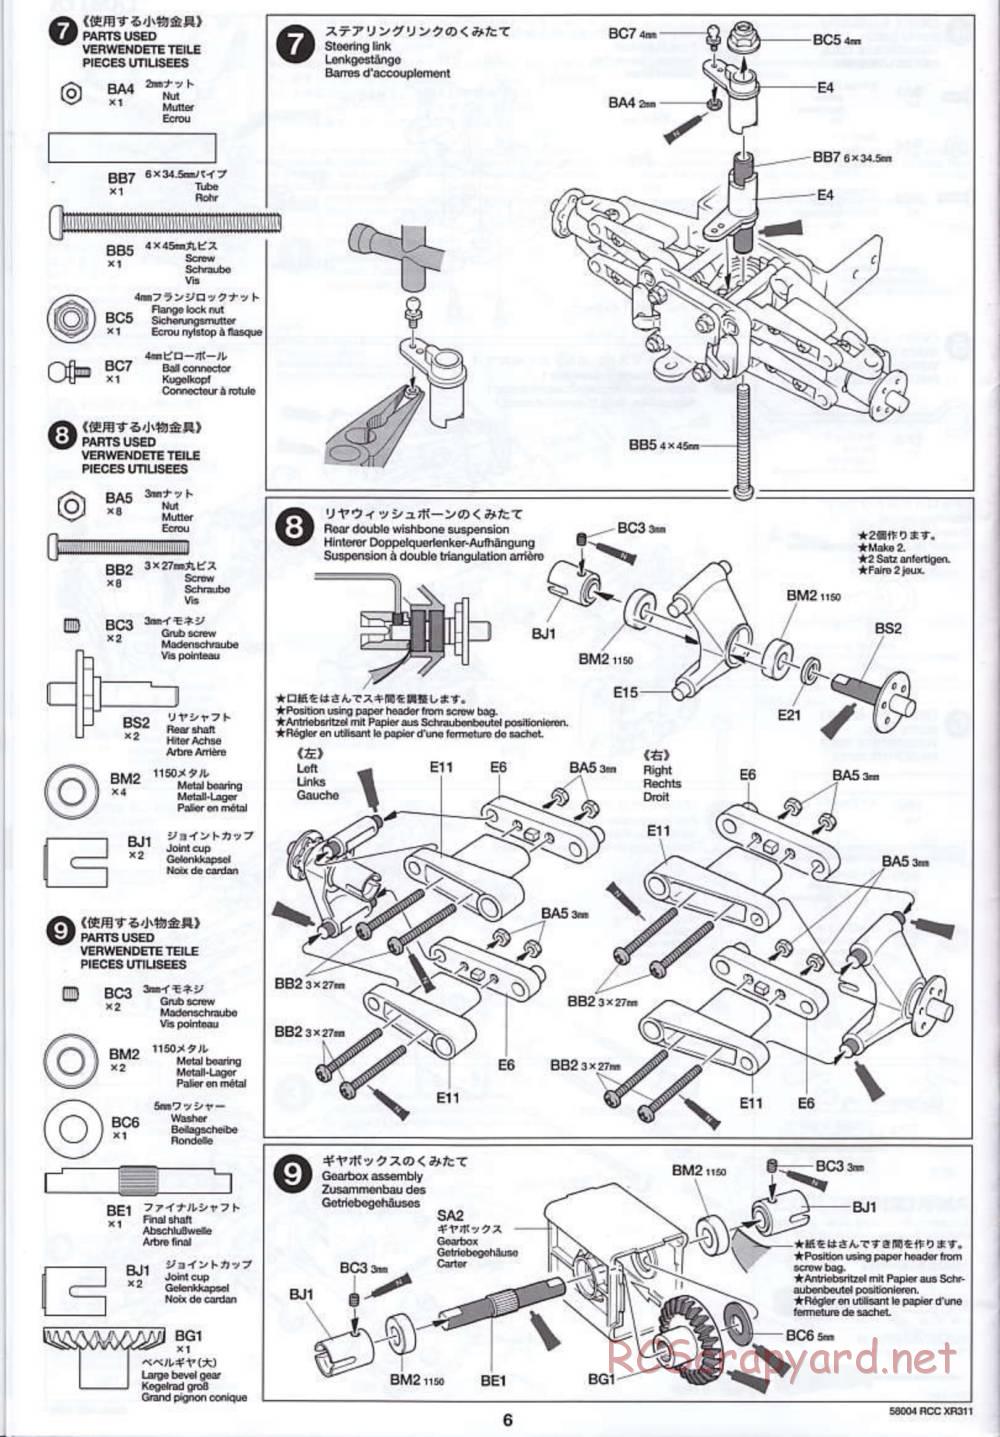 Tamiya - XR311 Combat Support Vehicle (2000) - 58004 - Manual - Page 7